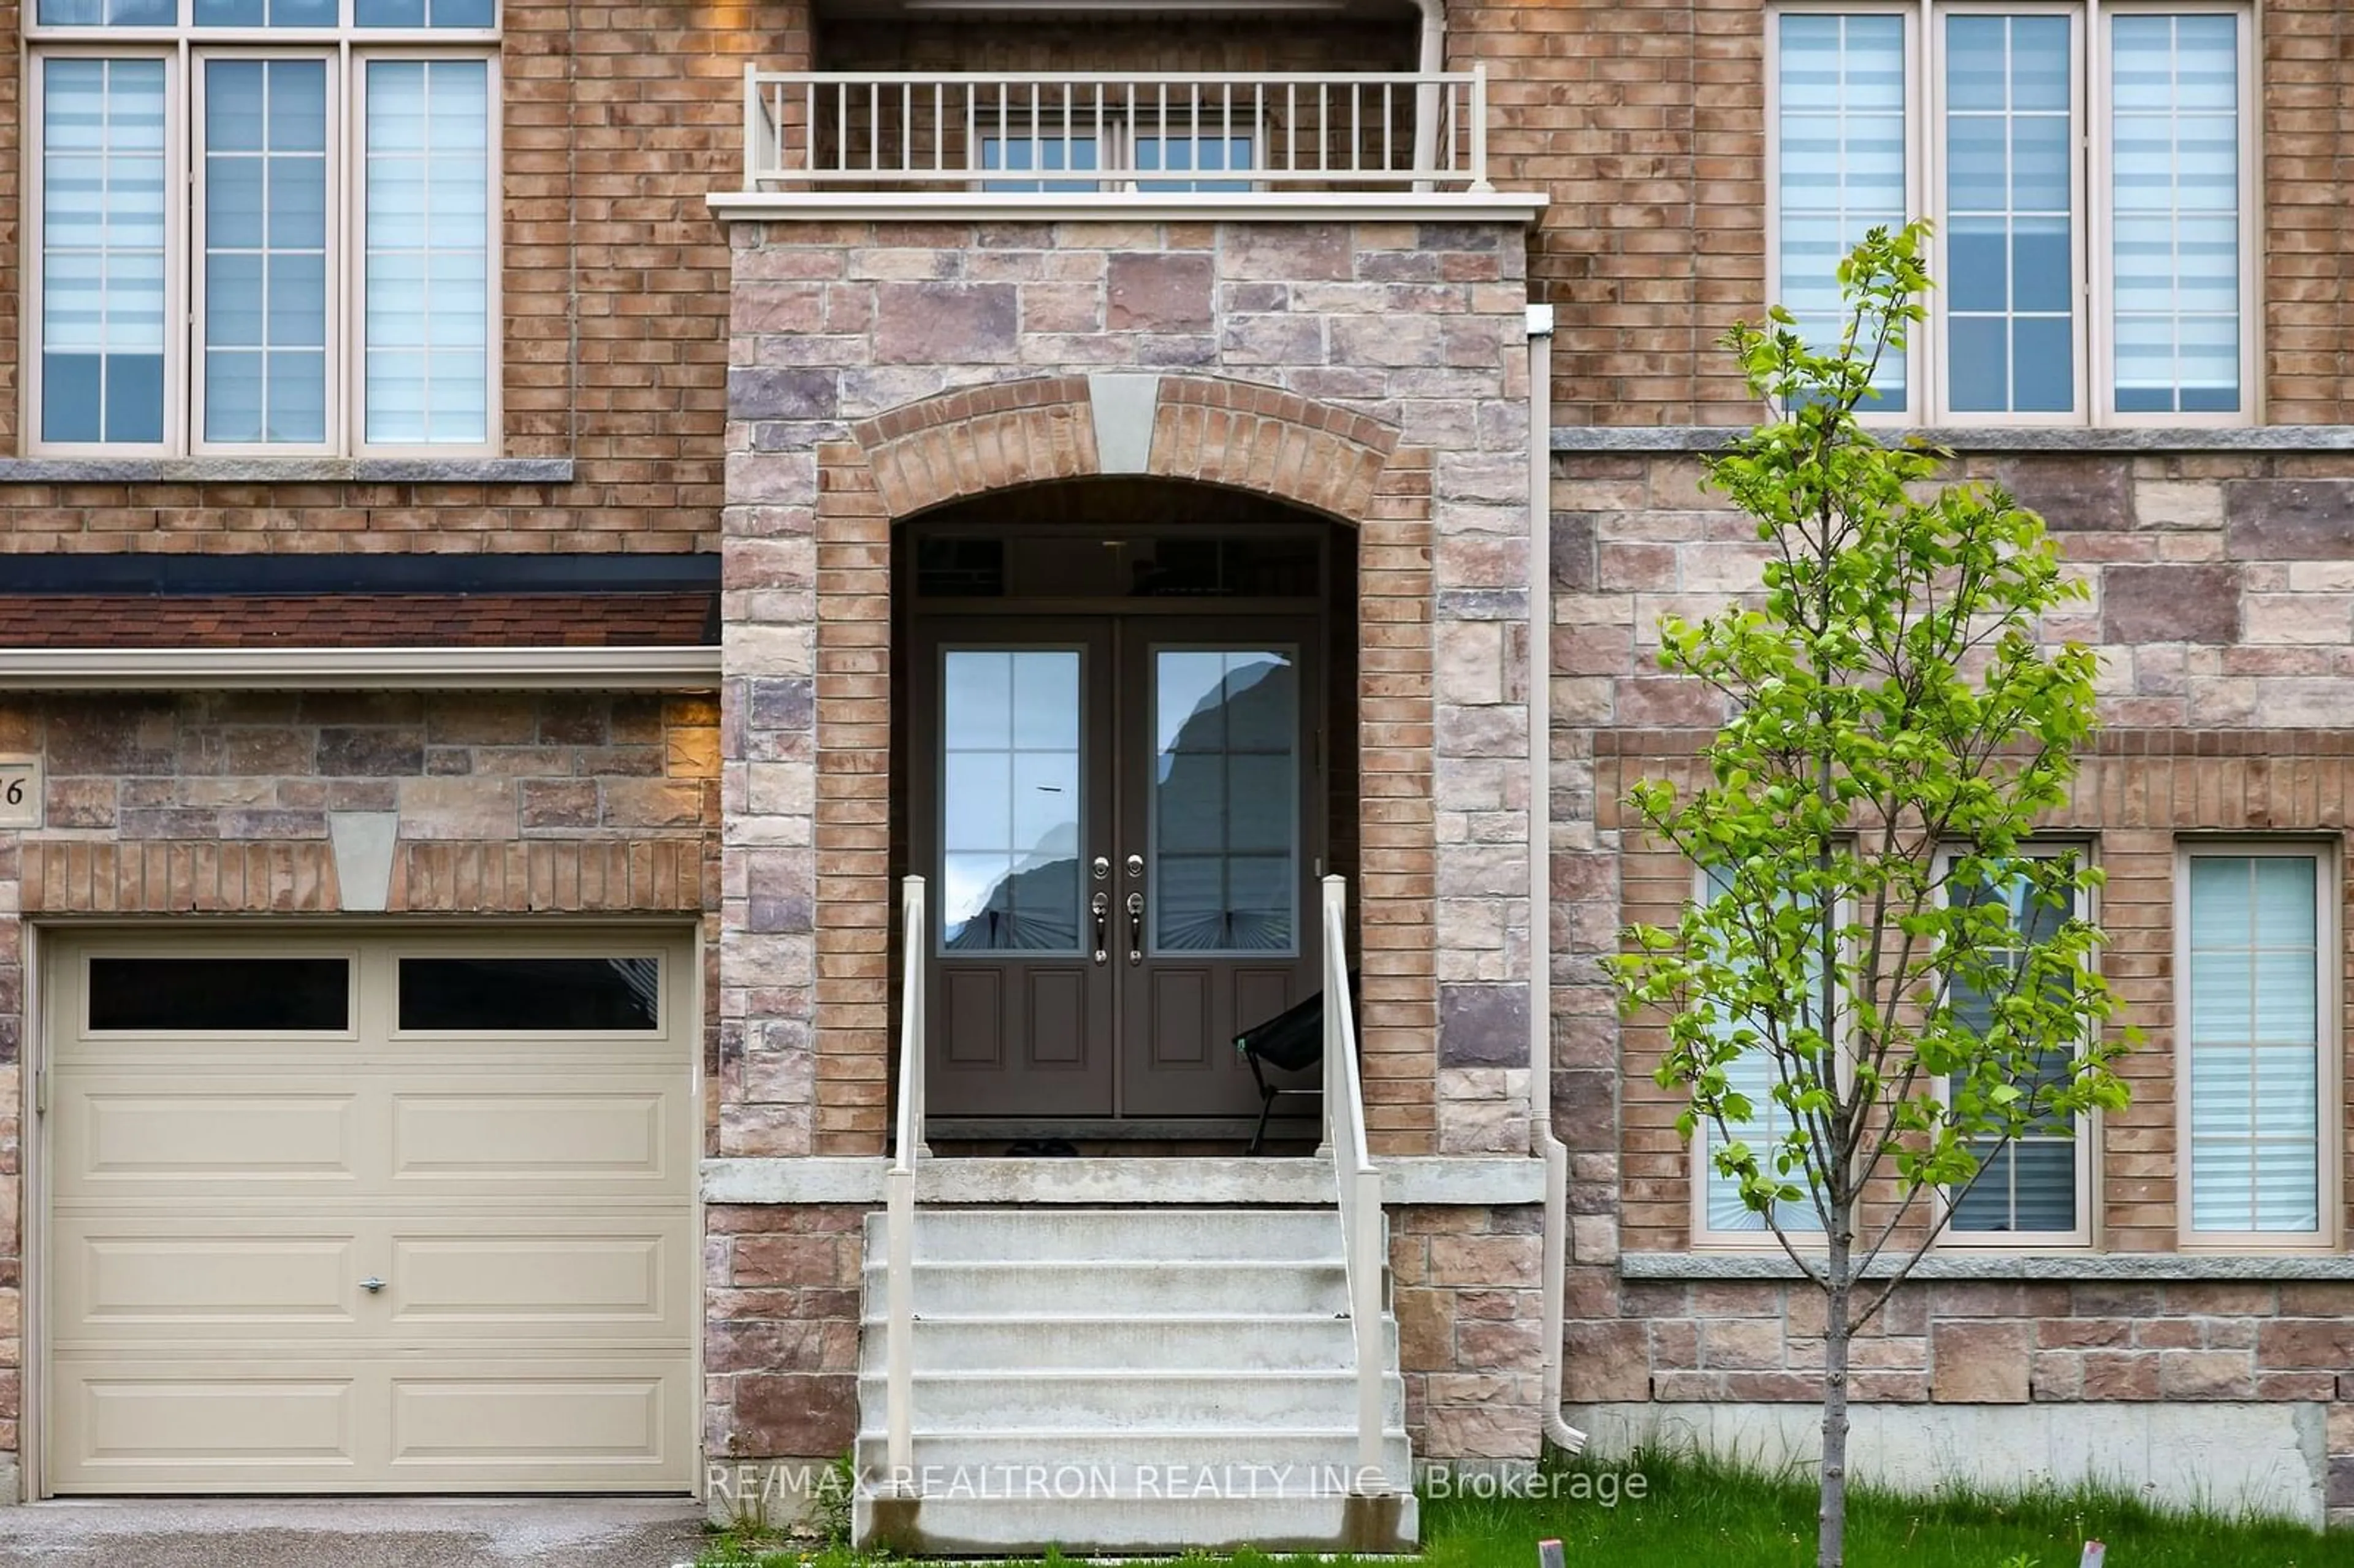 Home with brick exterior material for 3046 Monarch Dr, Orillia Ontario L3V 8K3